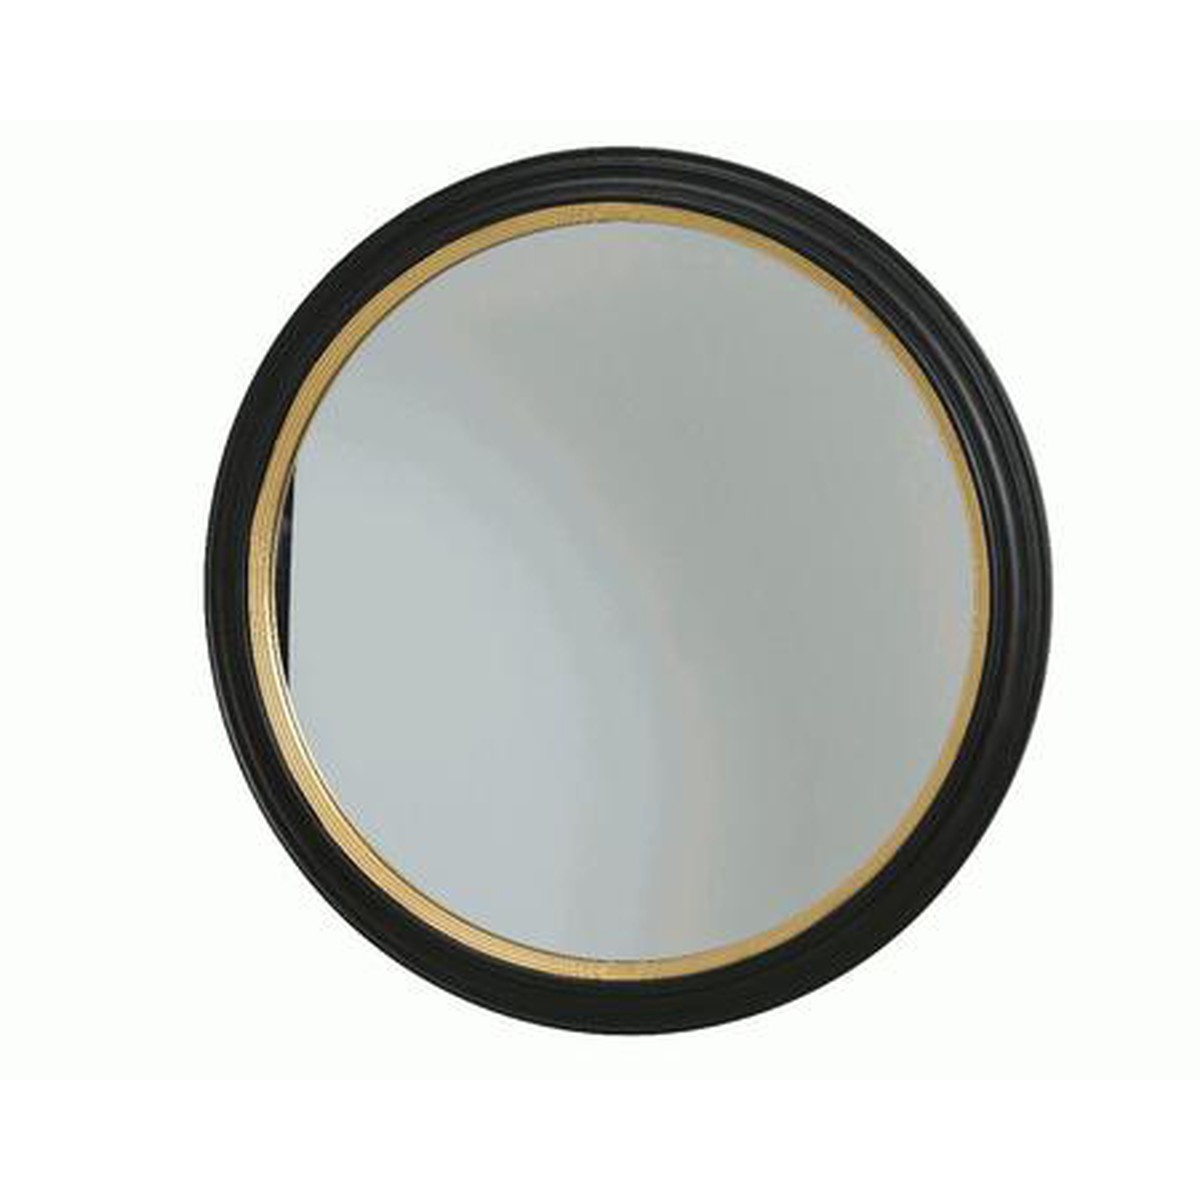   miroir rond bois pawlonia . dia60x4.5cm  dia60x4.5cm